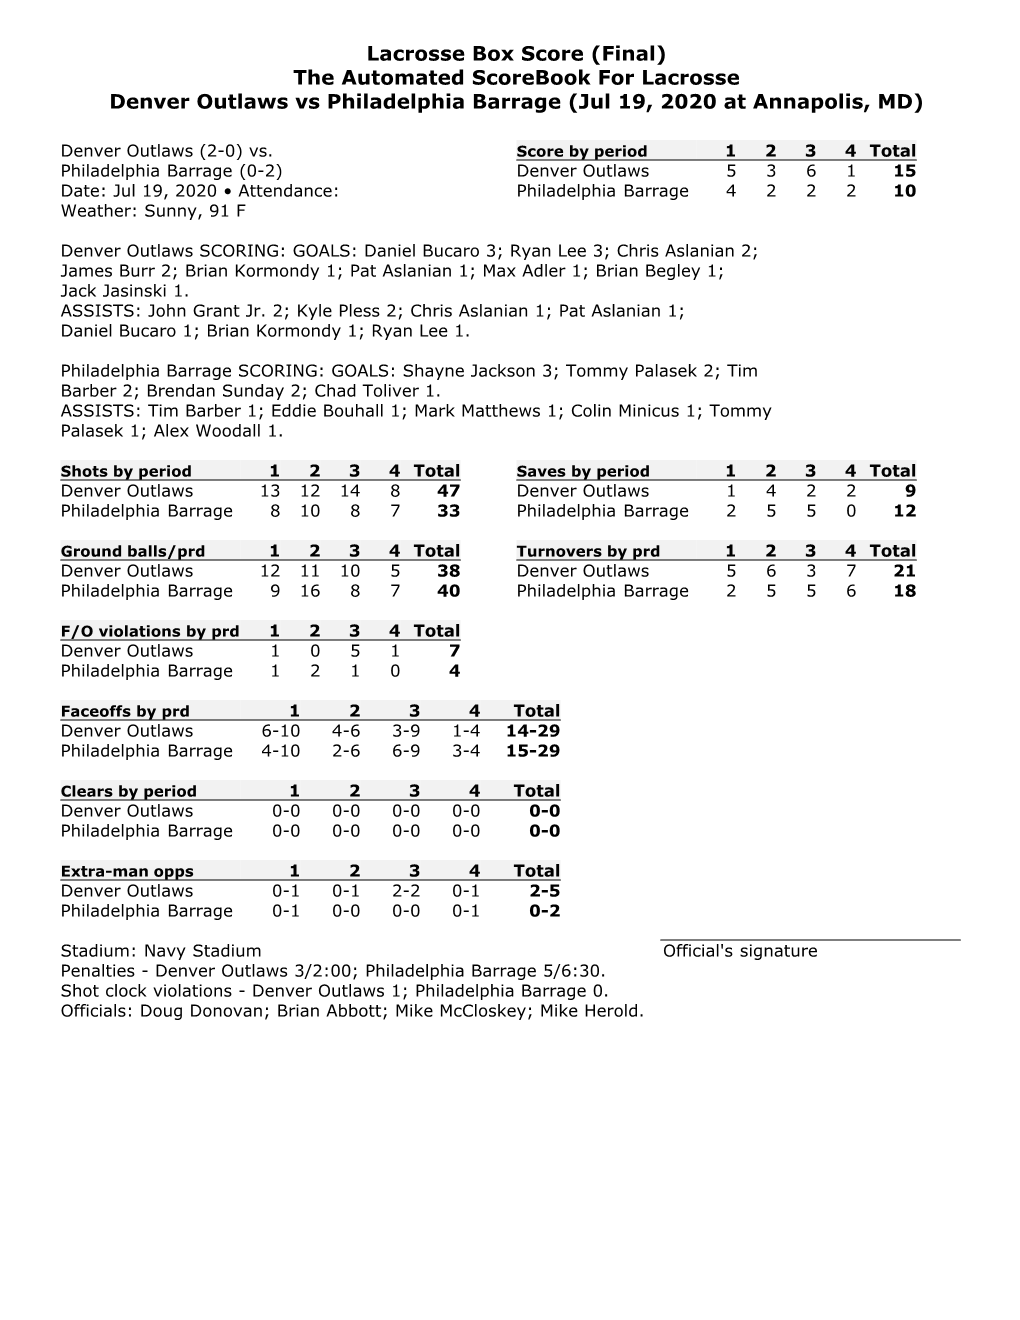 The Automated Scorebook for Lacrosse Denver Outlaws Vs Philadelphia Barrage (Jul 19, 2020 at Annapolis, MD)